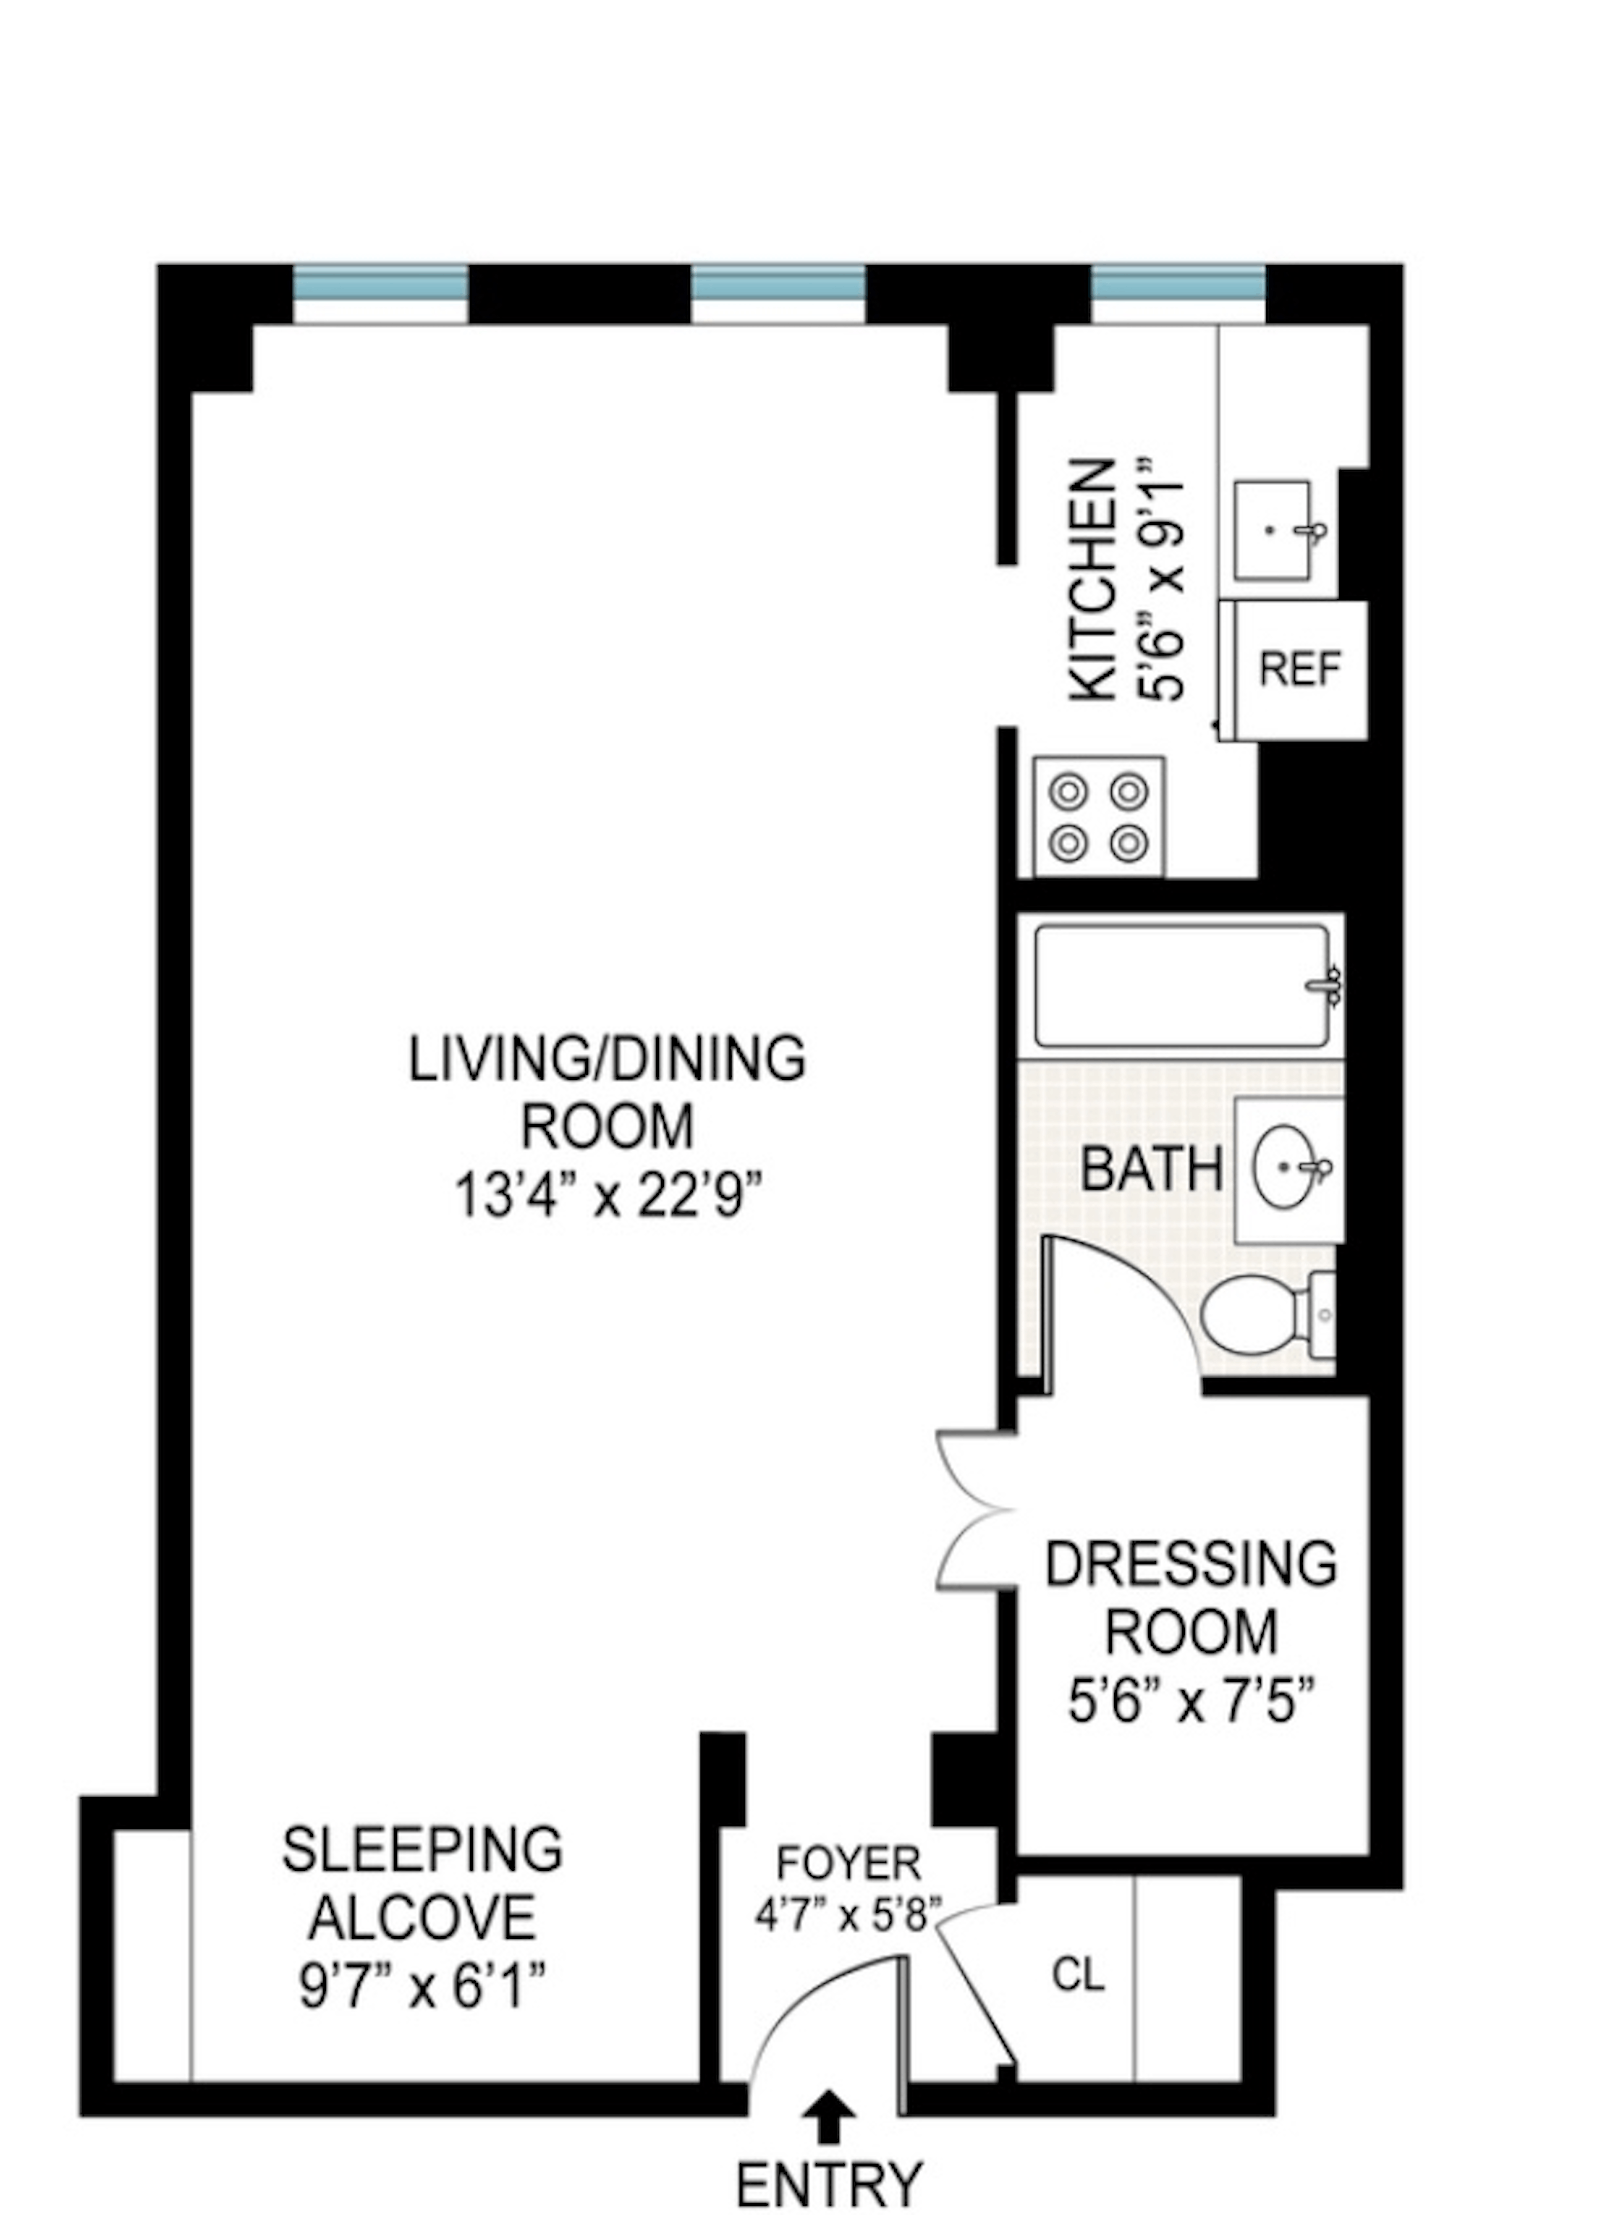 Floorplan for 353 West 56th Street